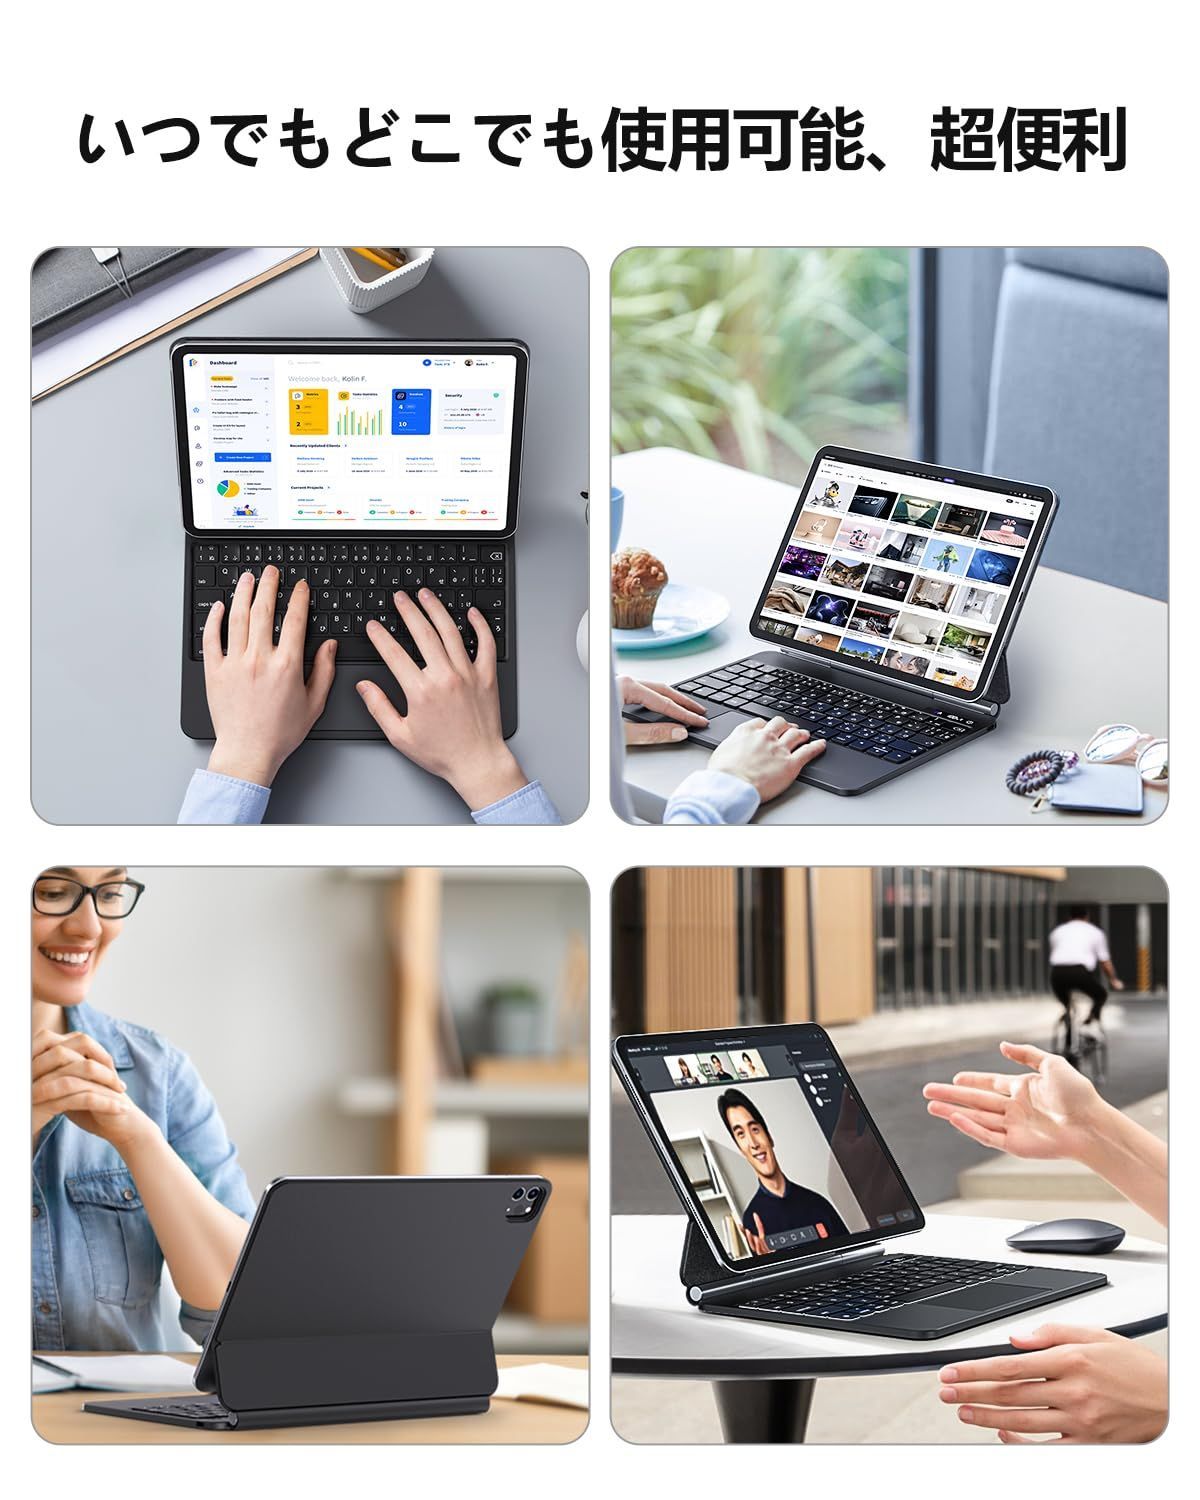 Omikamo マジックキーボード iPad Pro11 iPad Air5 iPad Air4対応 日本 